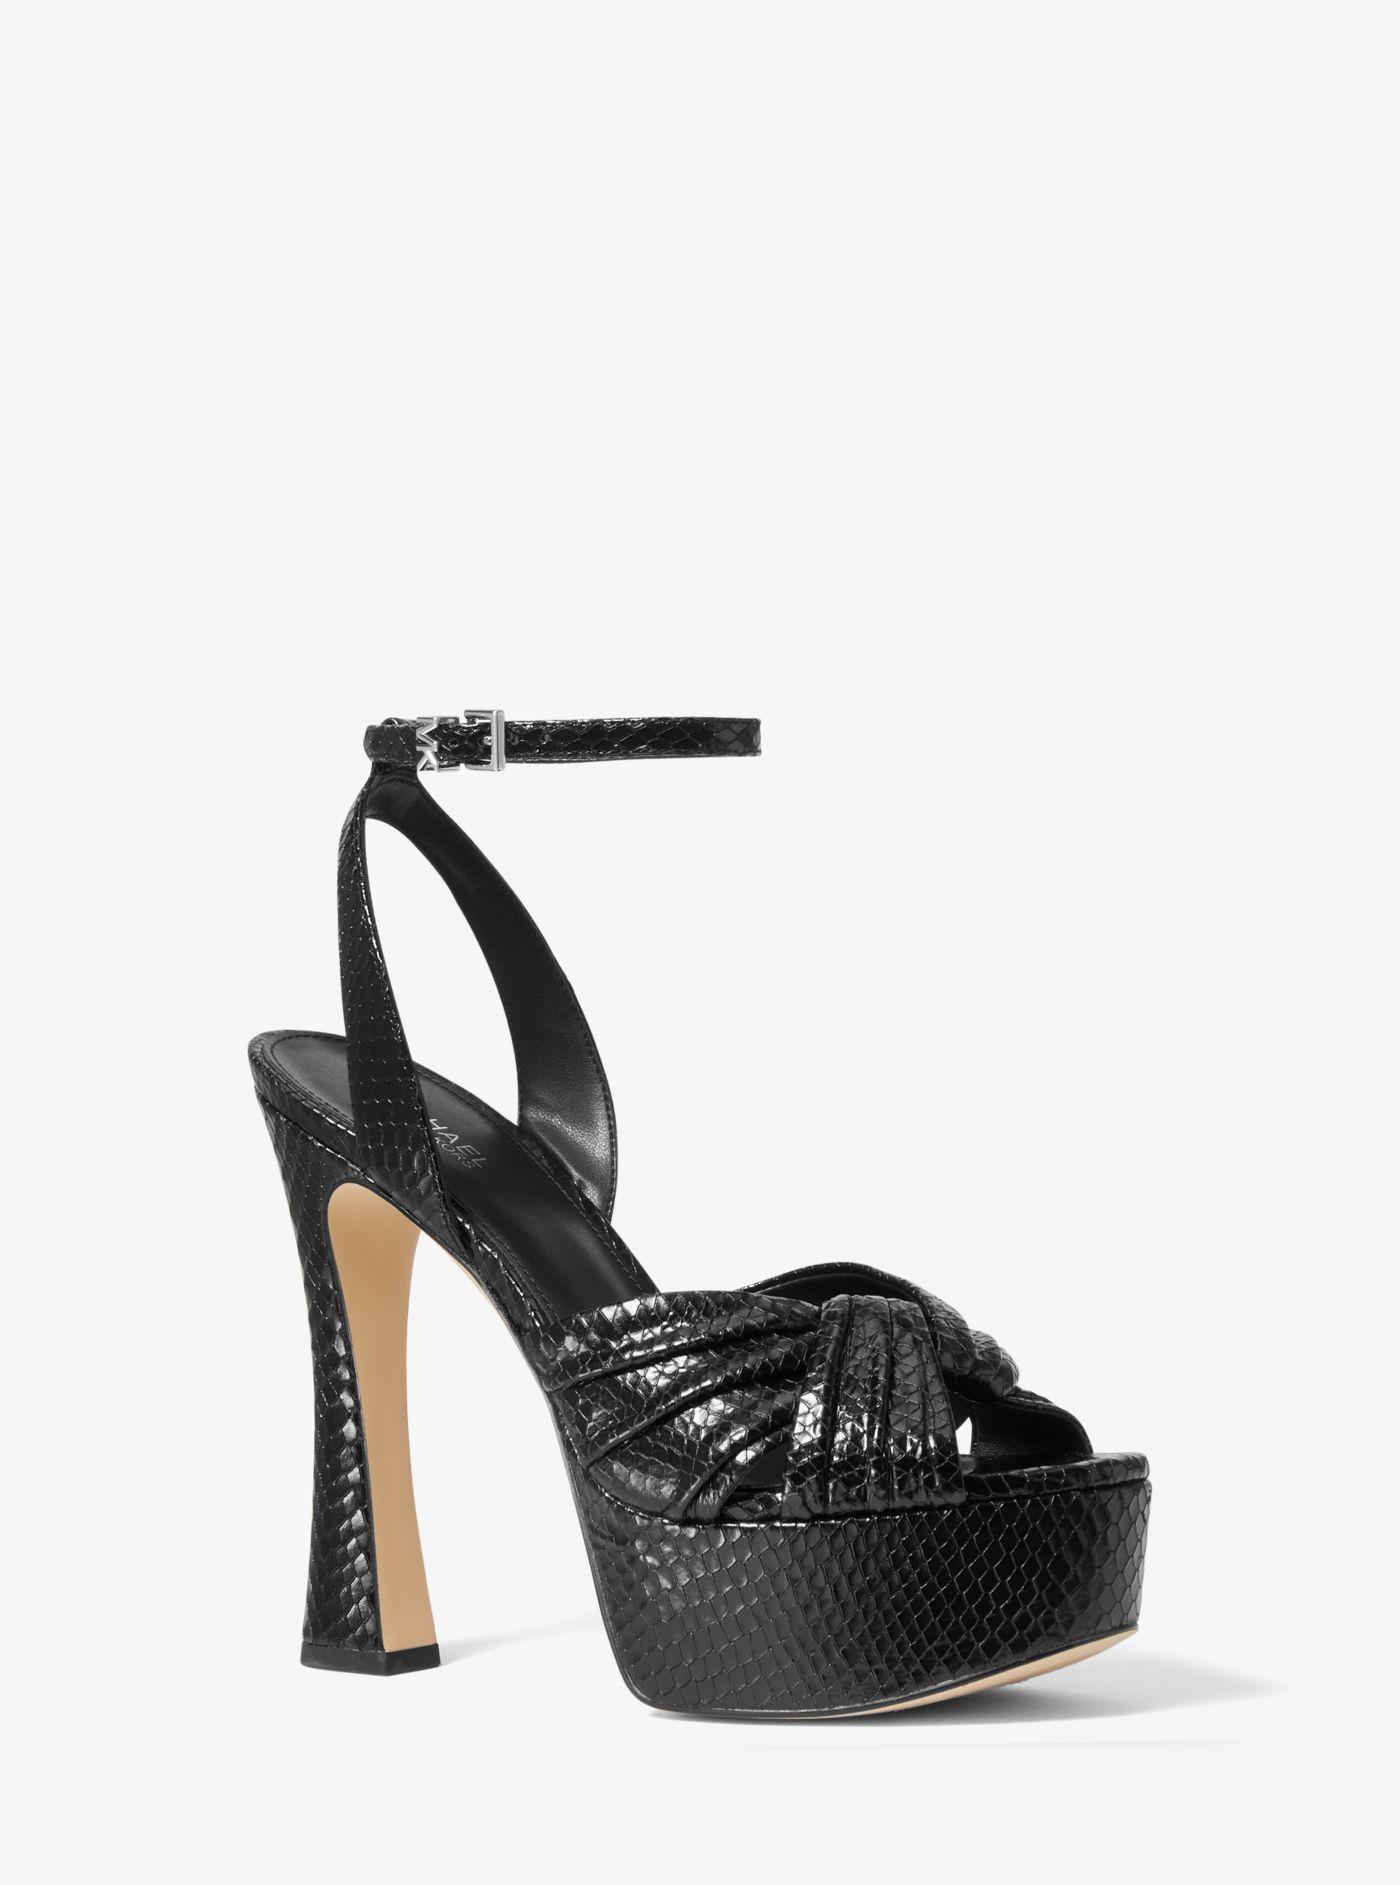 Michael Kors Selena Snake Embossed Leather Platform Sandal in Black | Lyst